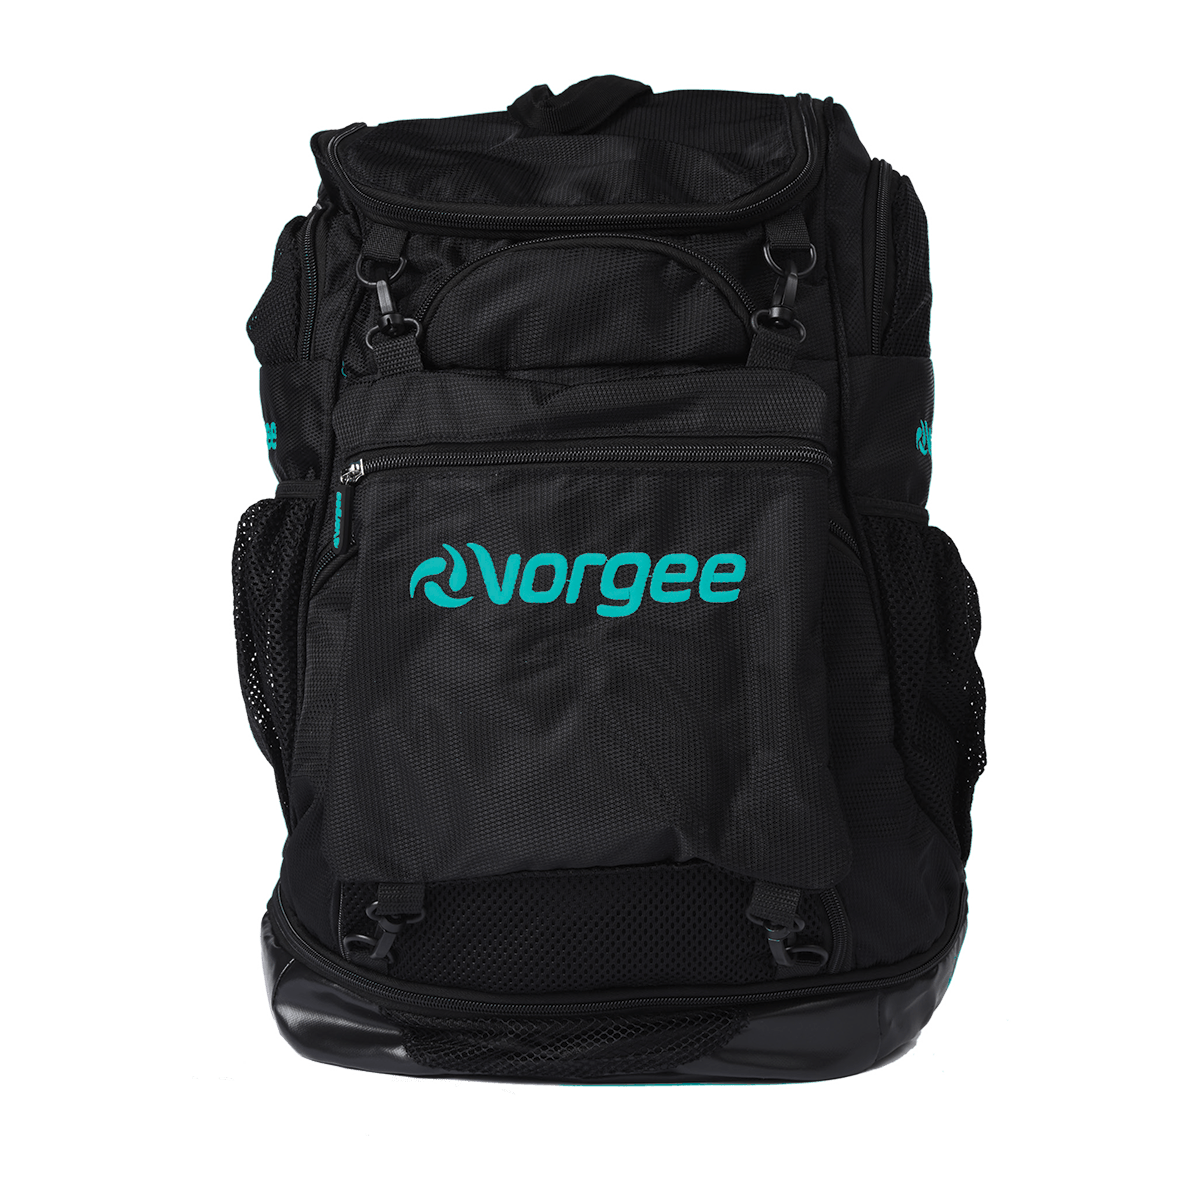 Swimmer's Backpack by Vorgee - Ocean Junction